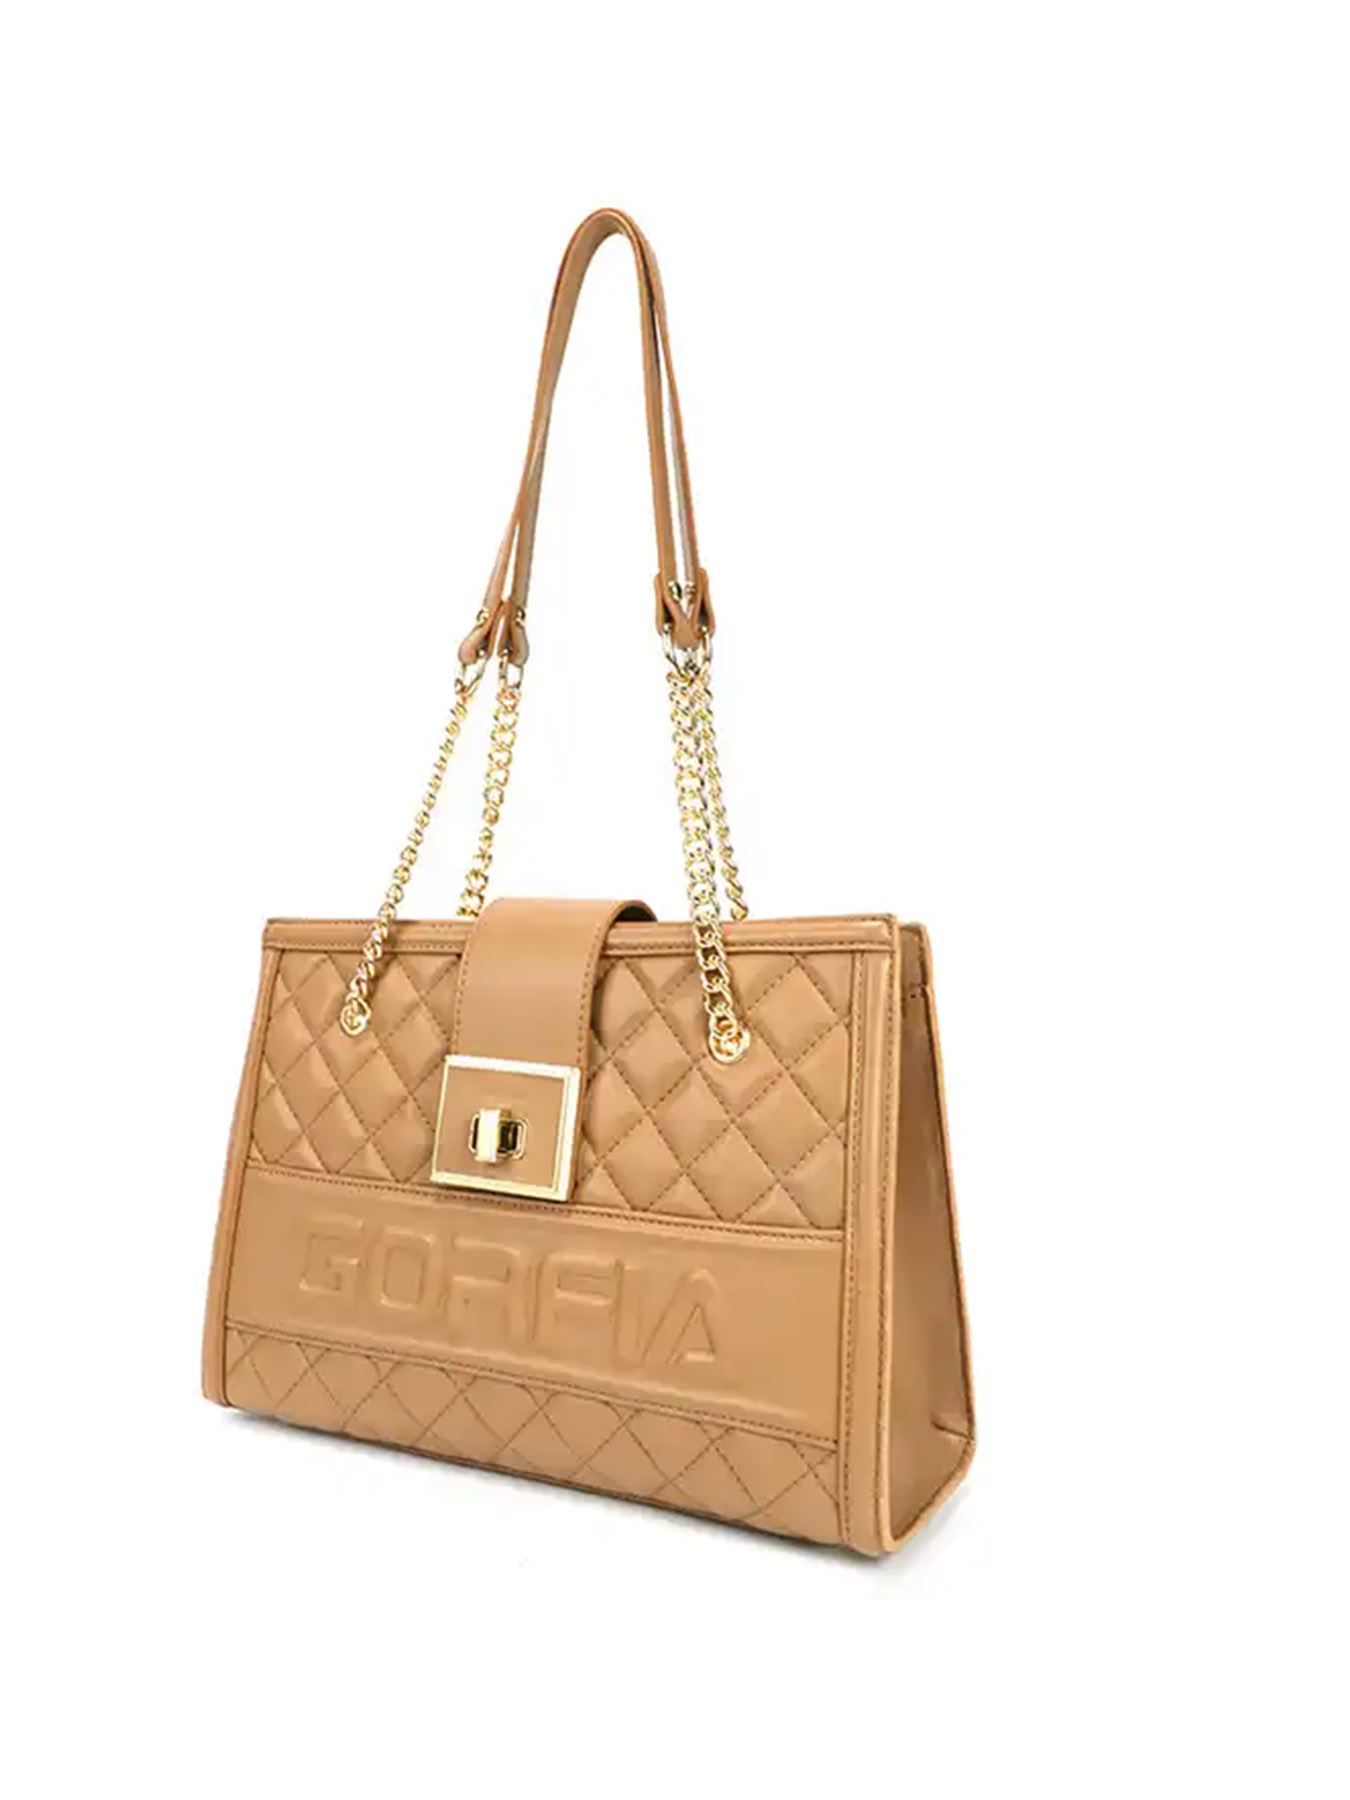 Women's leather customized handbag